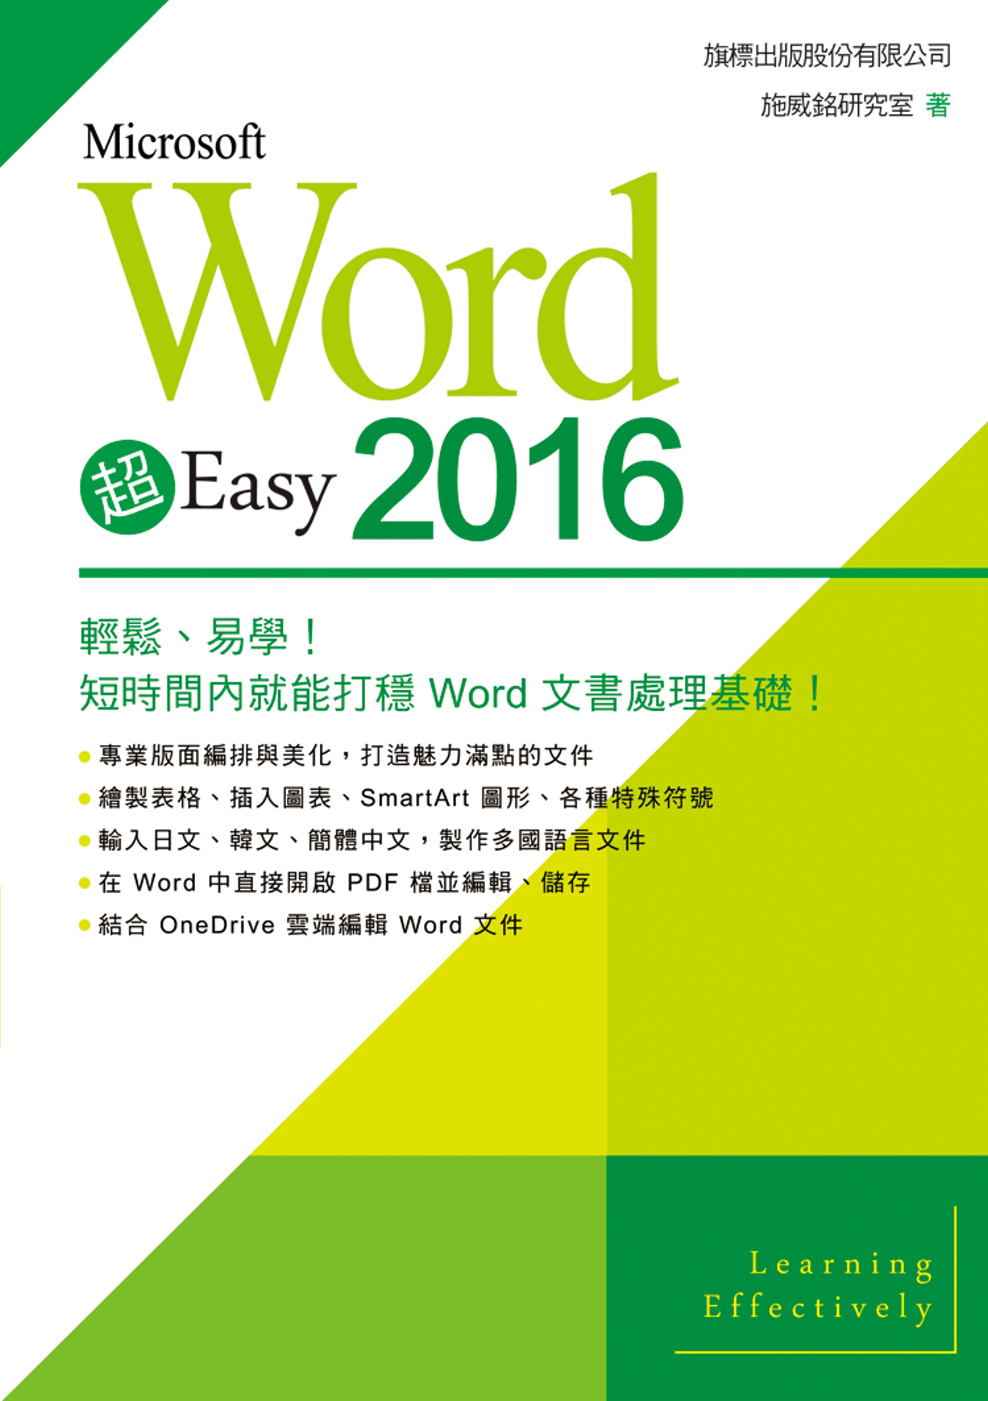 Microsoft Word 2016 超Easy